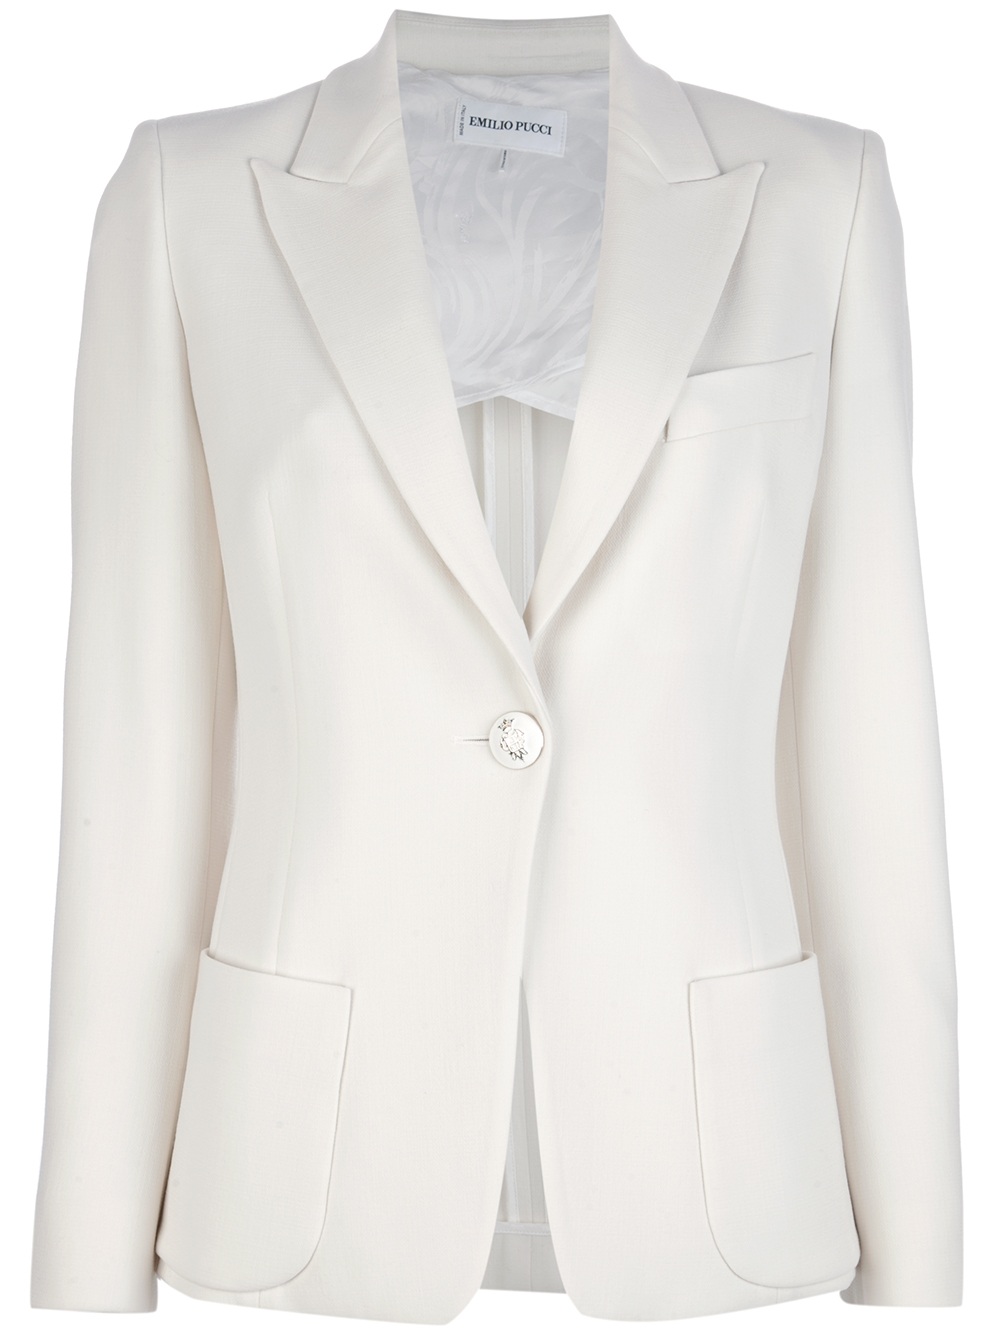 Emilio Pucci Peaked Lapels Blazer in White | Lyst